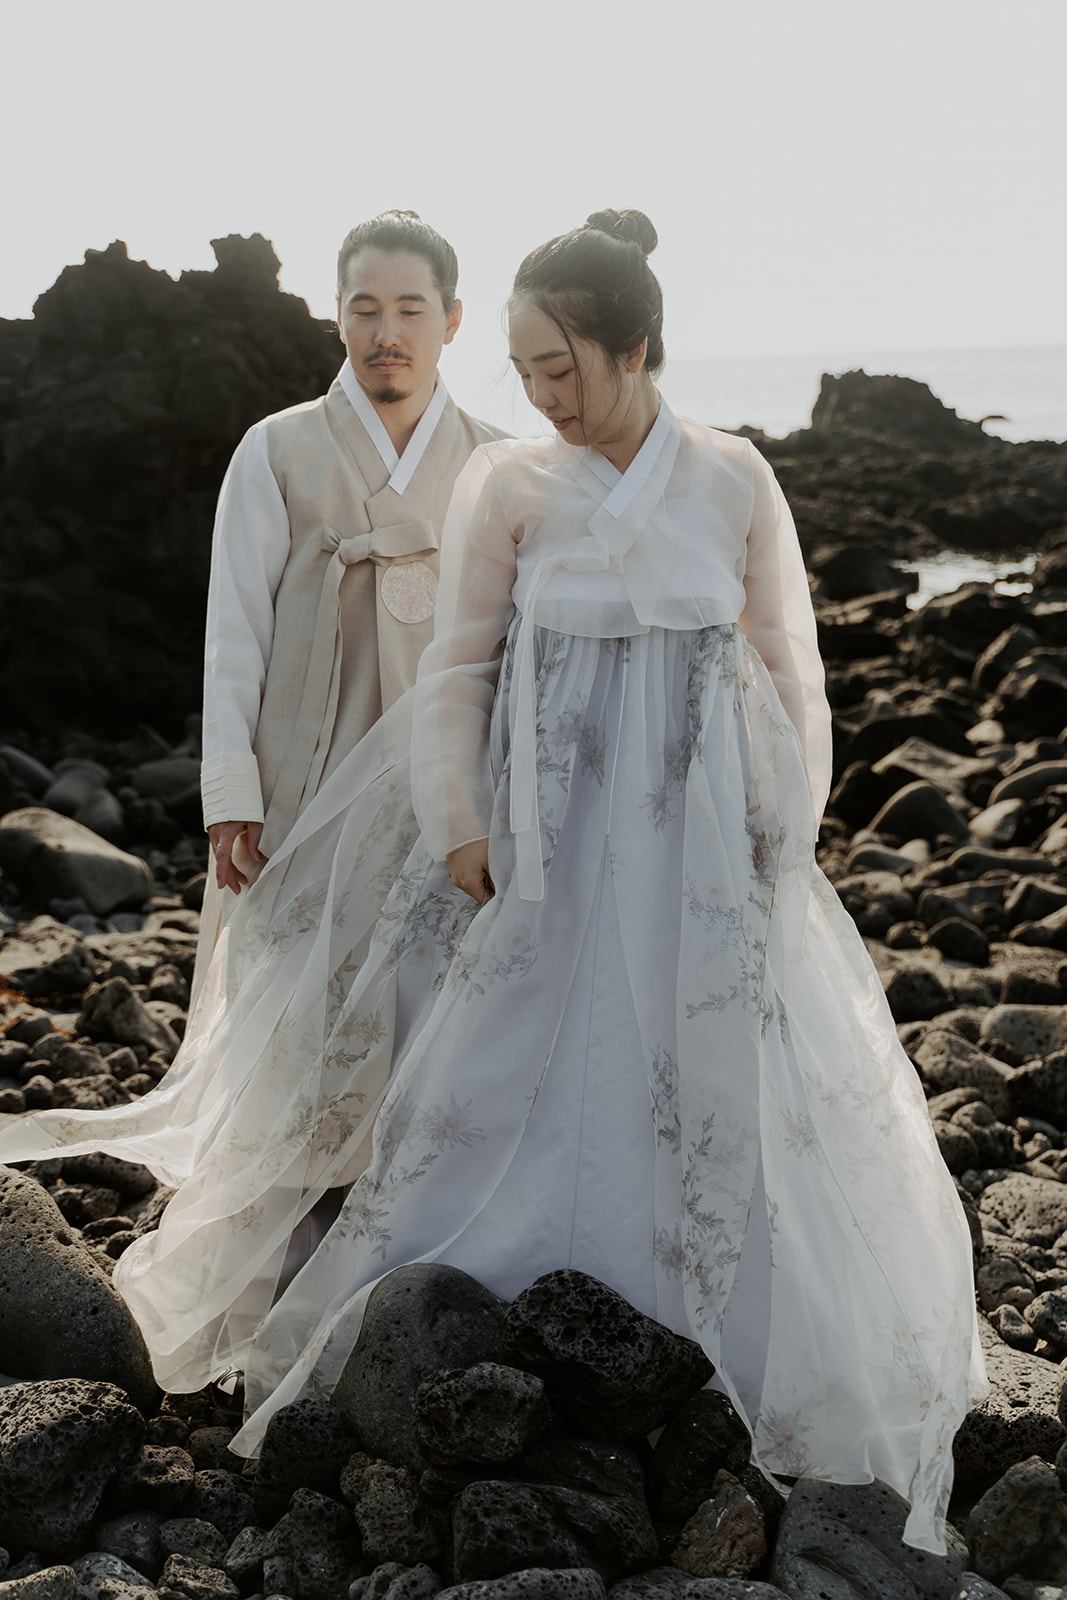 A pre-wedding couple standing on rocks near the ocean.